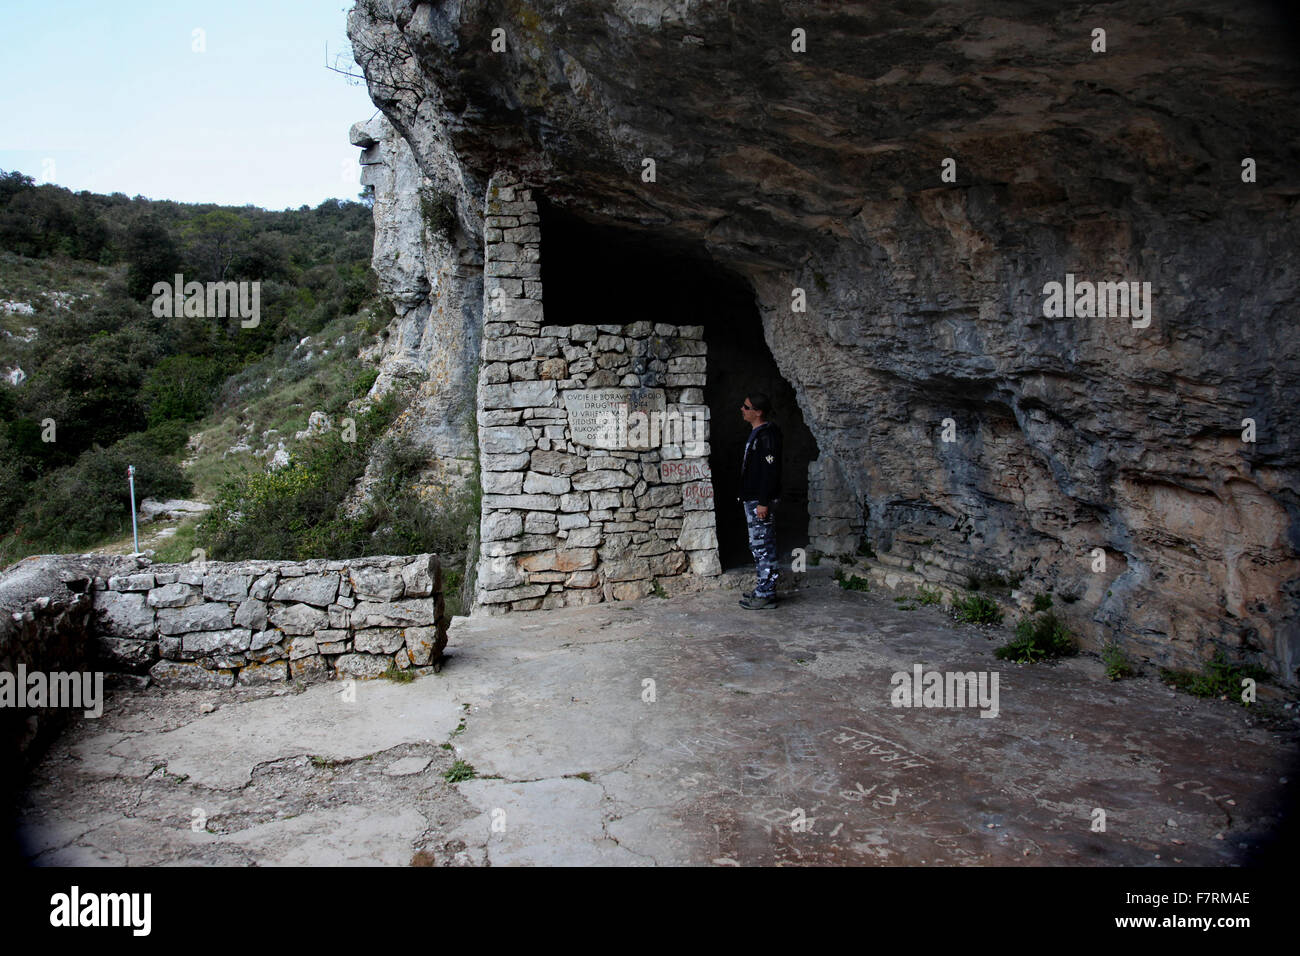 Cave where Marshal Tito hided during WW2, Vis Island Croatia Stock Photo -  Alamy